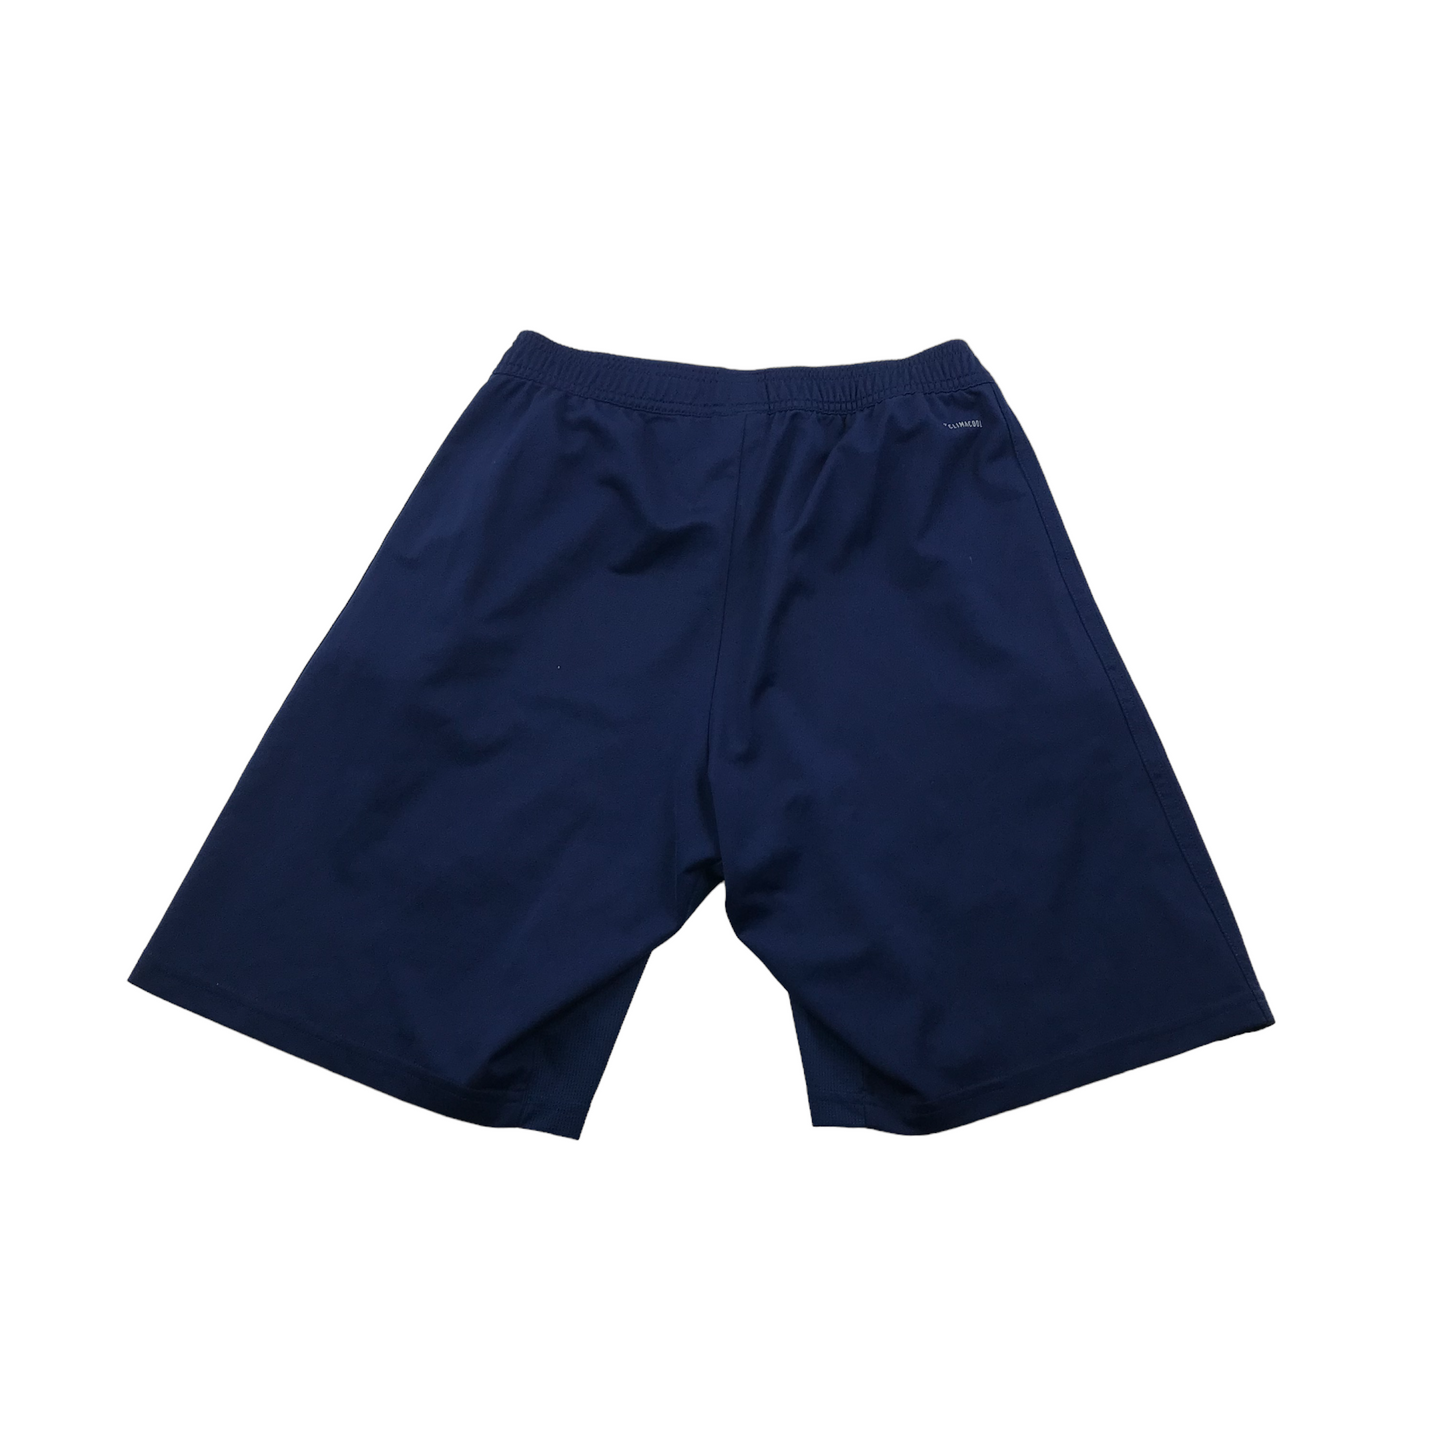 Adidas Blue Football Shorts Adult Size S